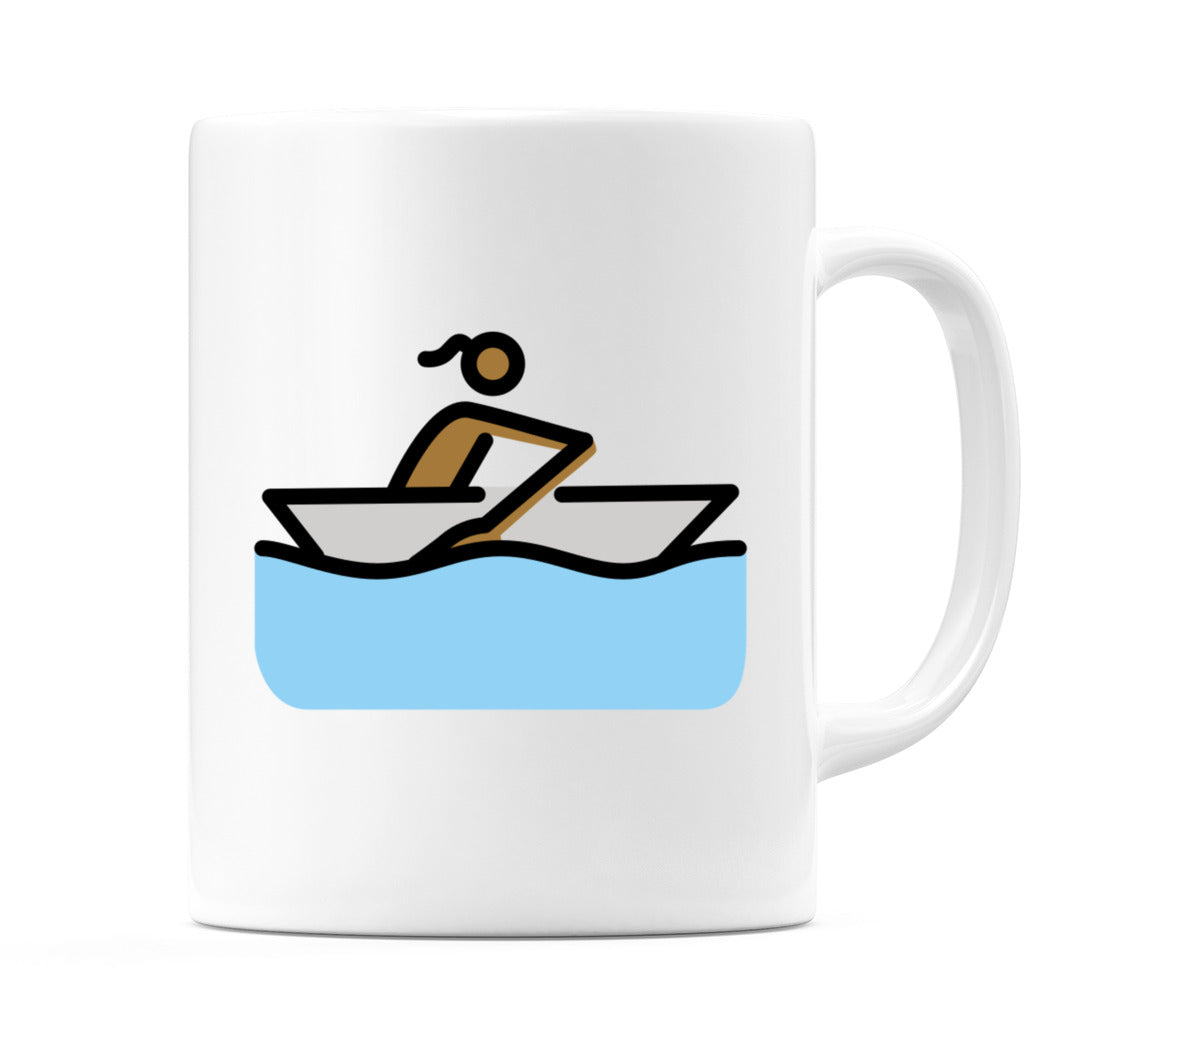 Female Rowing Boat: Medium-Dark Skin Tone Emoji Mug